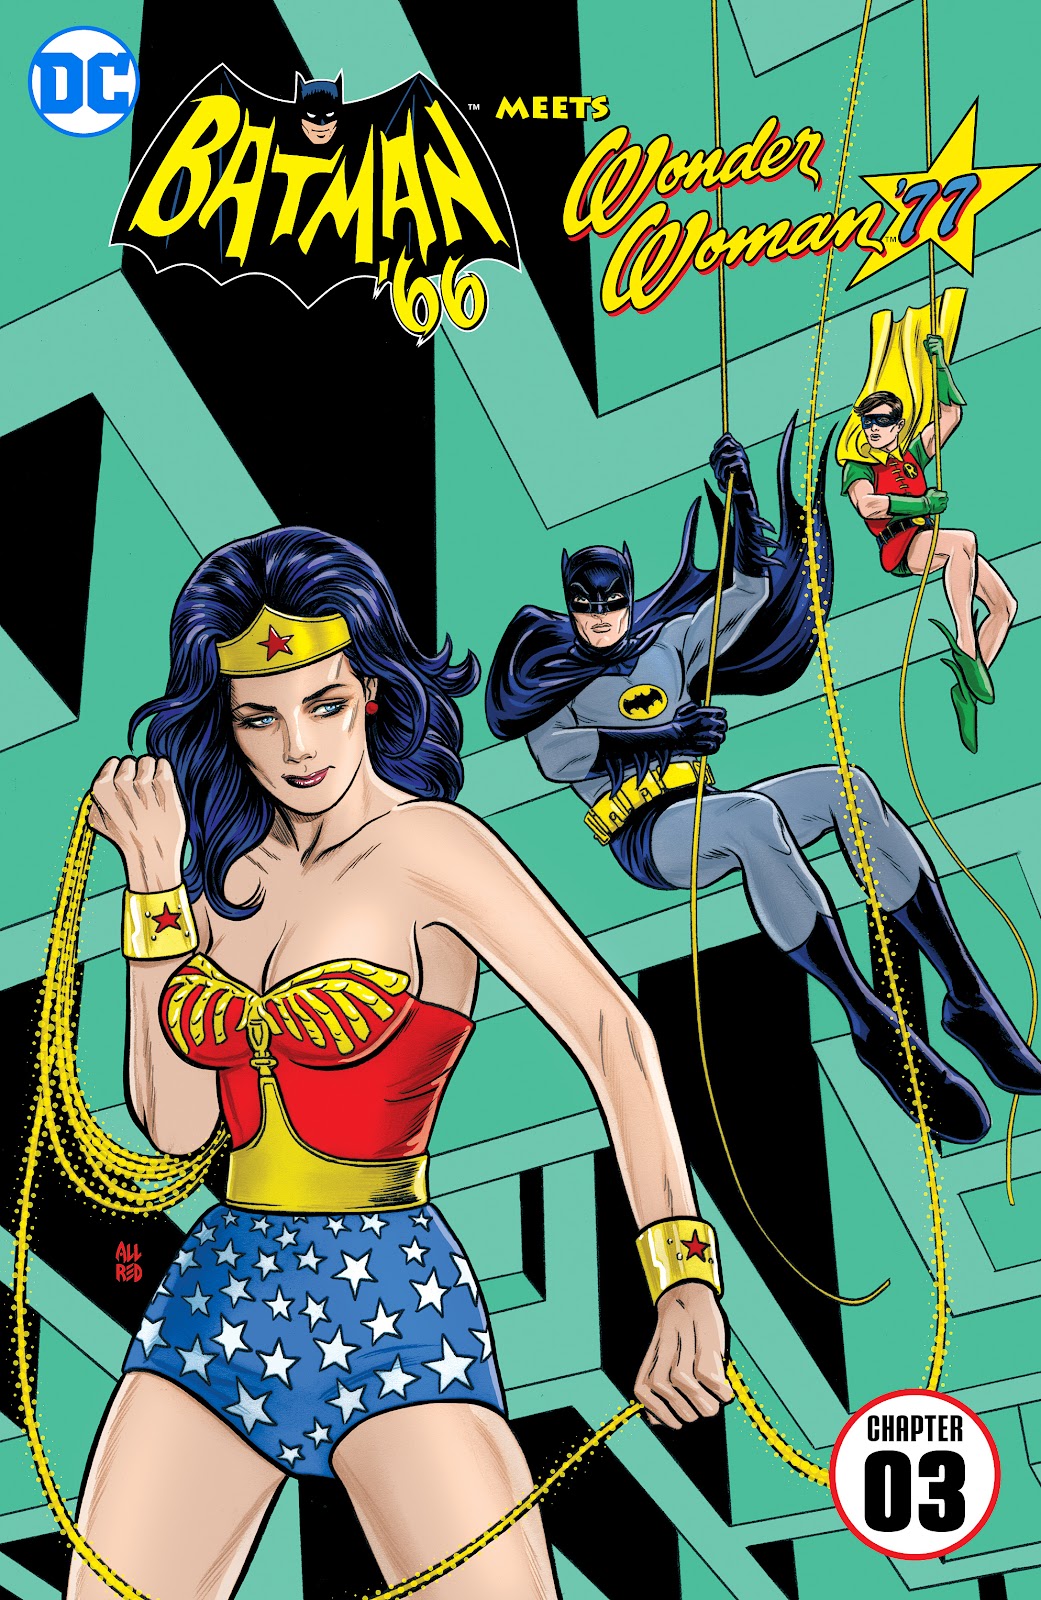 Batman '66 Meets Wonder Woman '77 issue 3 - Page 2